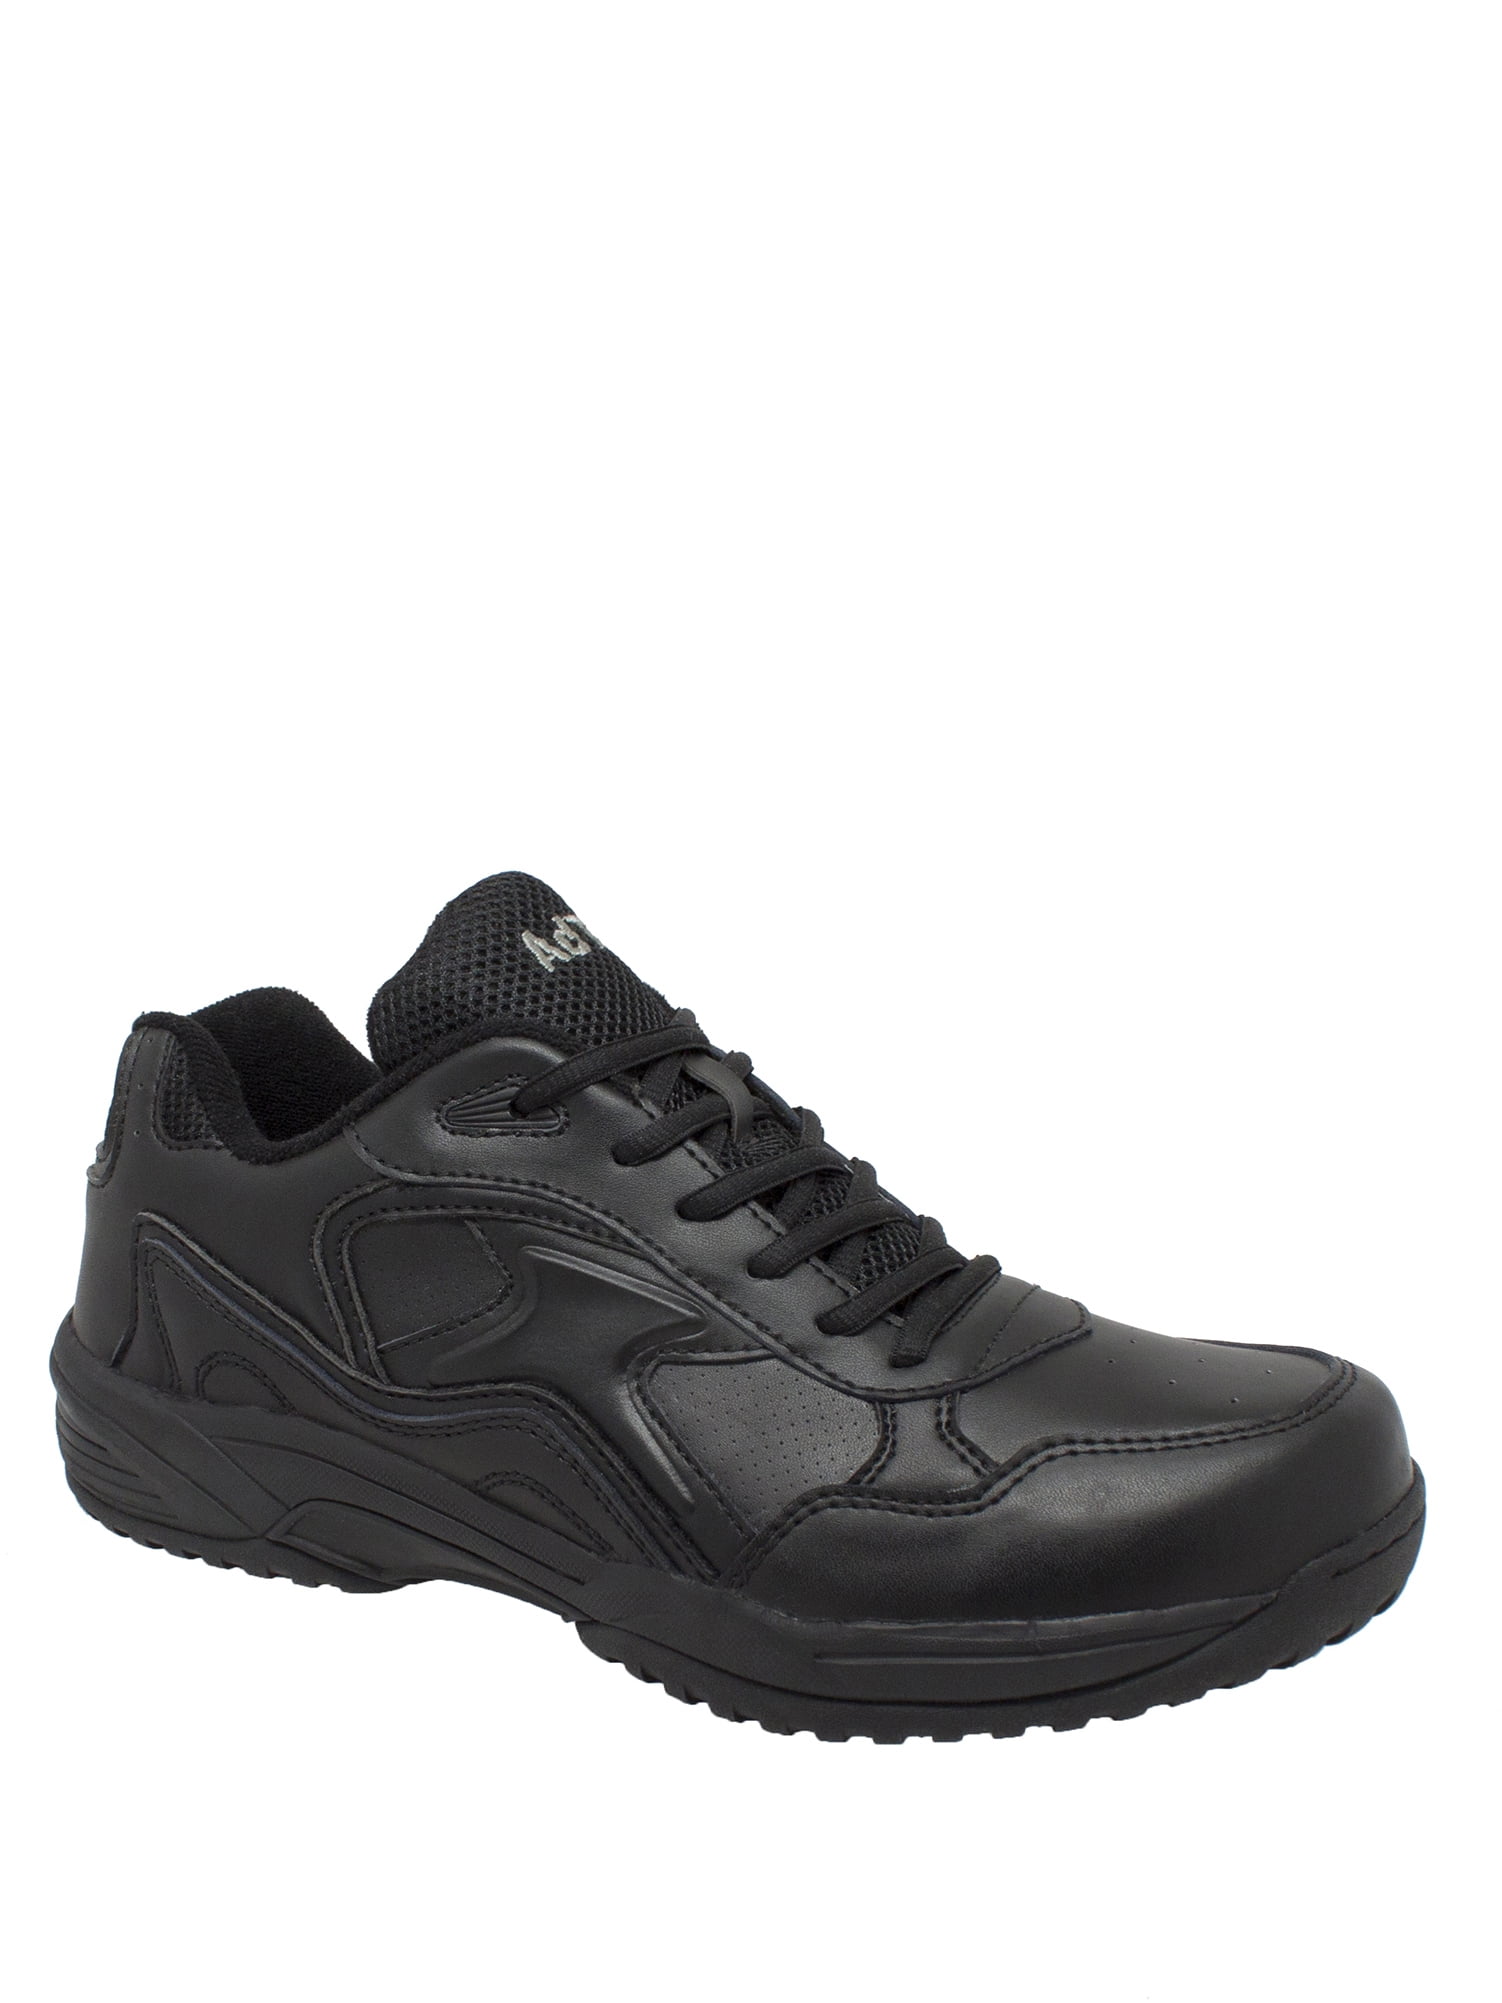 Adtec Footwear Mens Composite Toe Uniform Athletic Black 5-M 